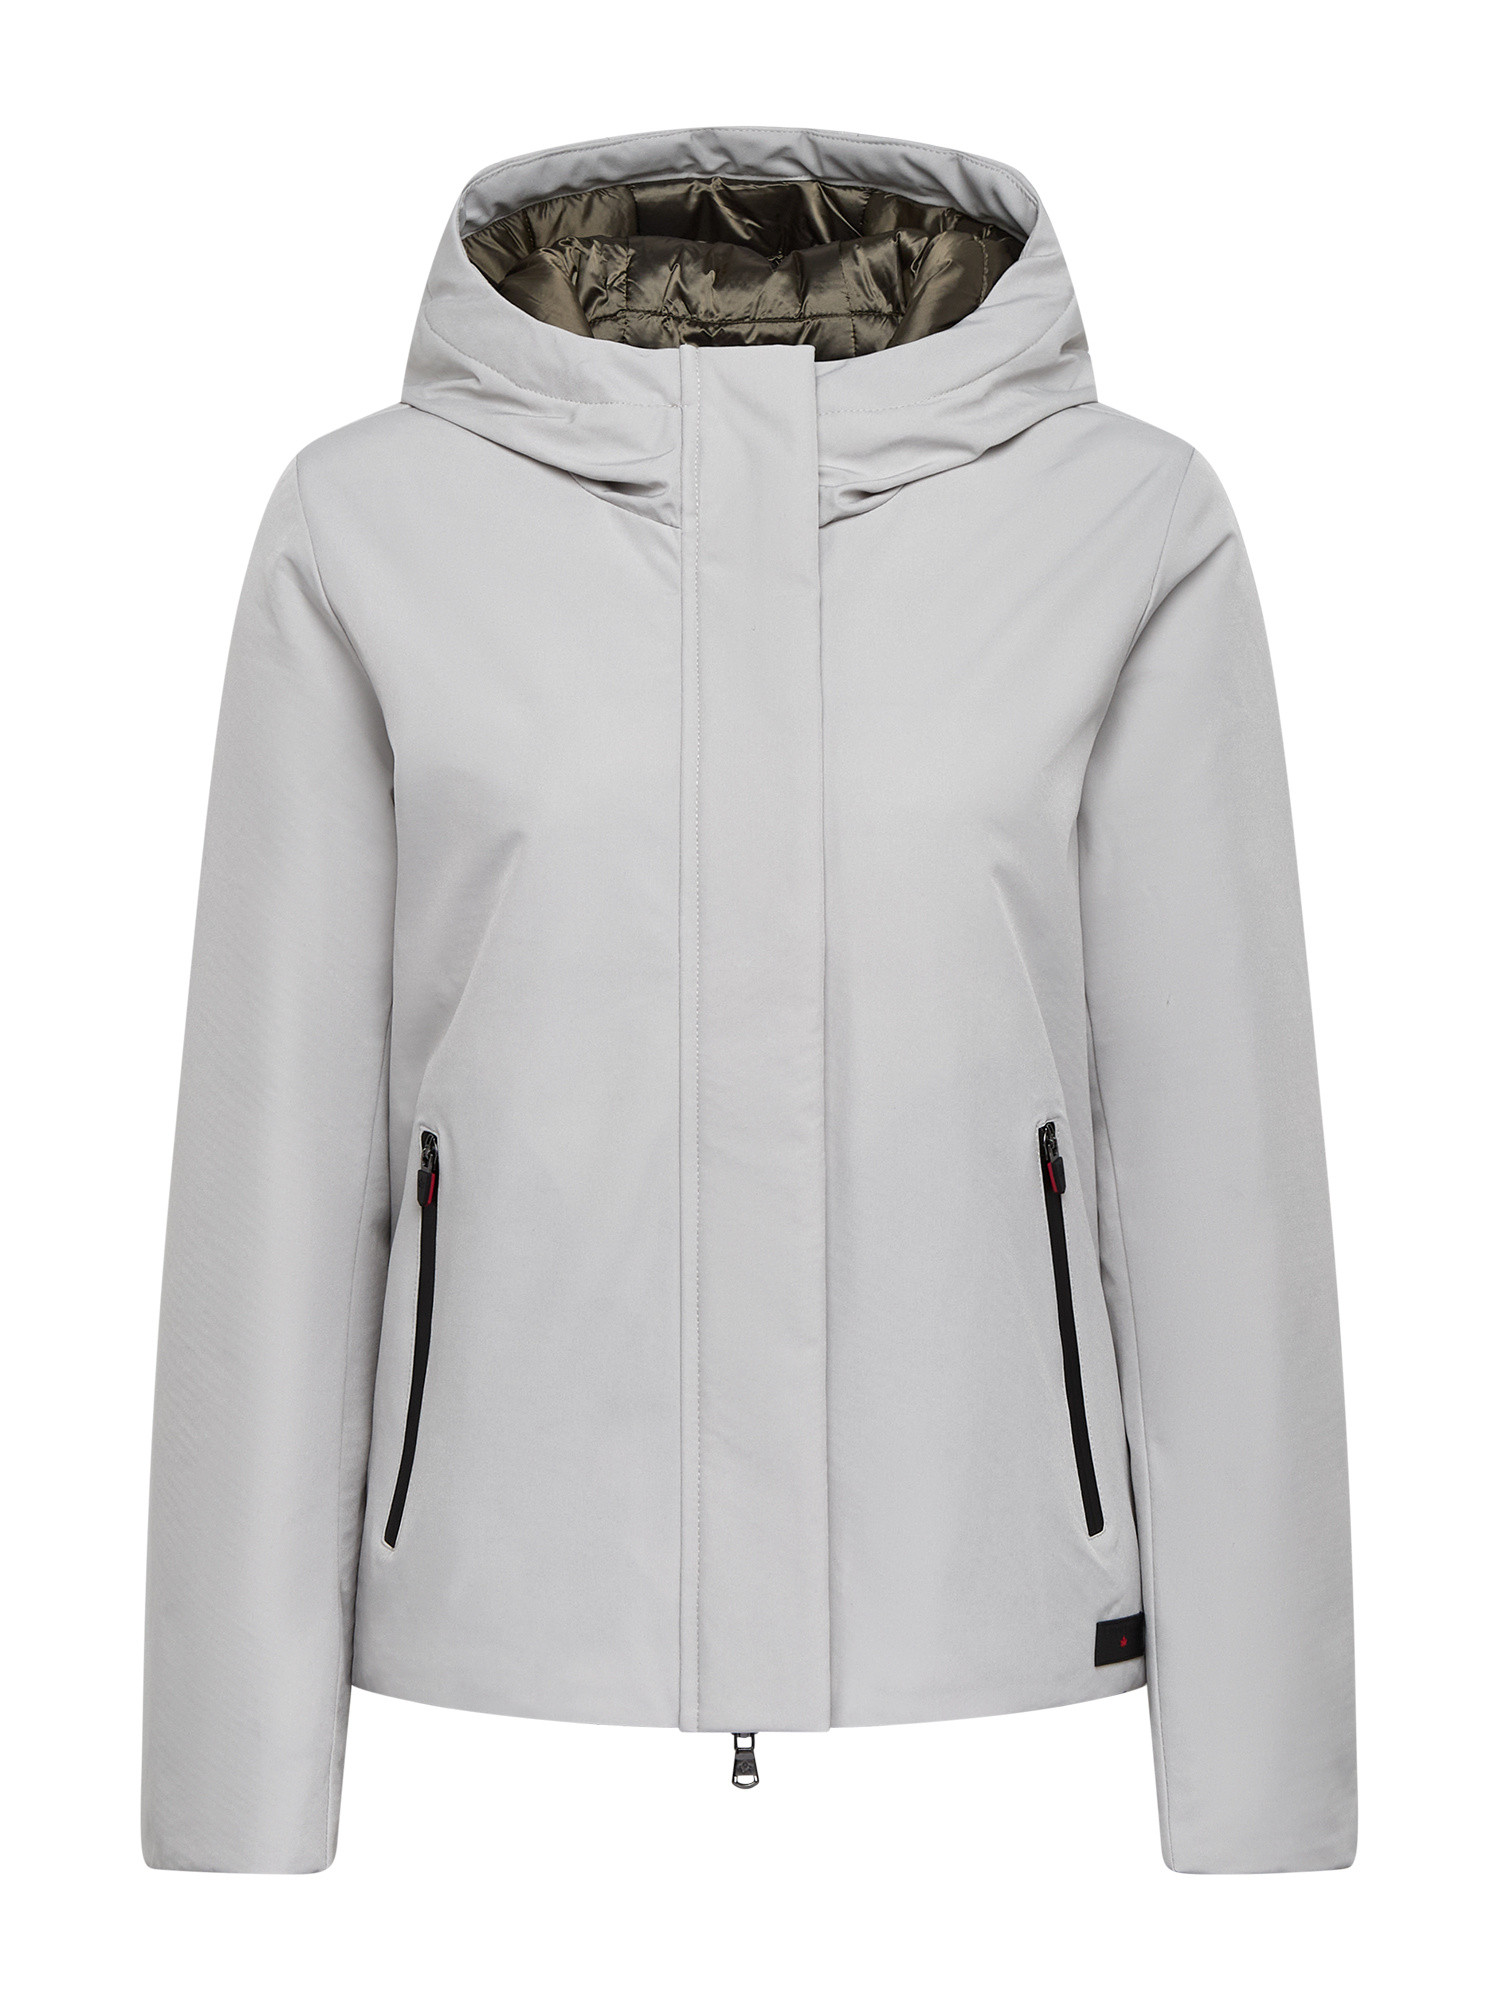 Canadian - Soft zip Jacket, Grigio chiaro, large image number 0